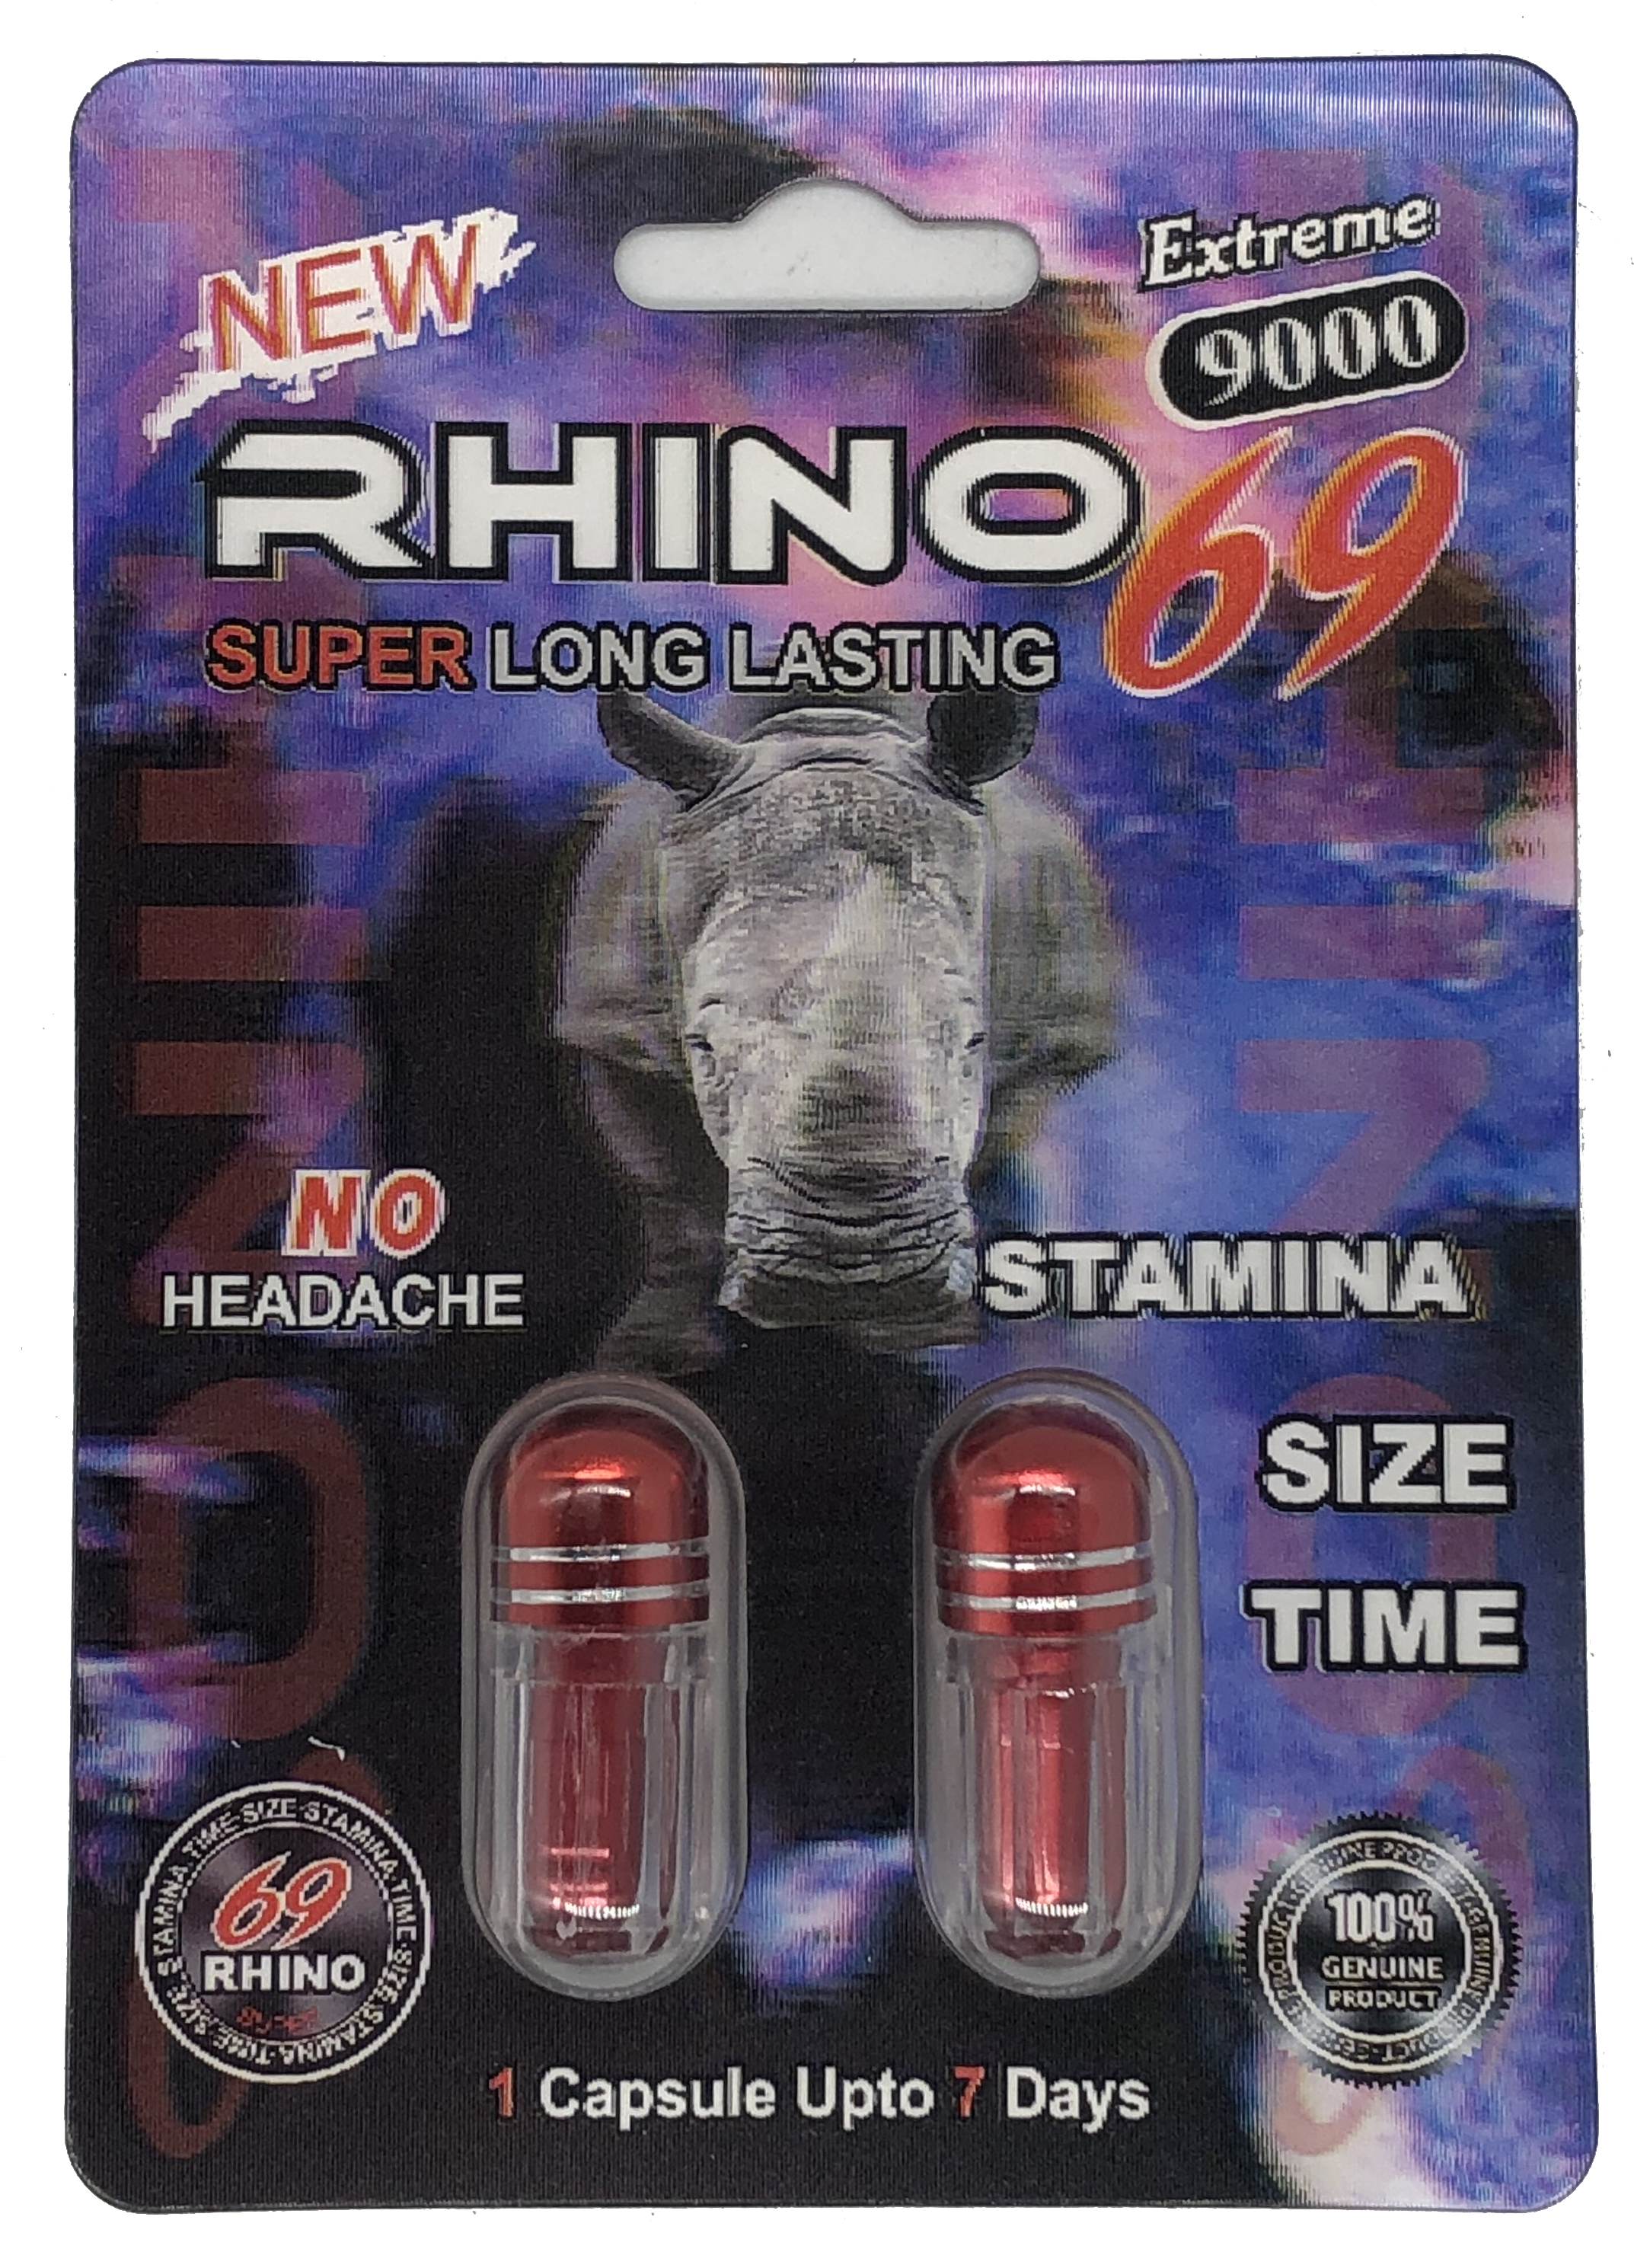 Rhino pill reddit